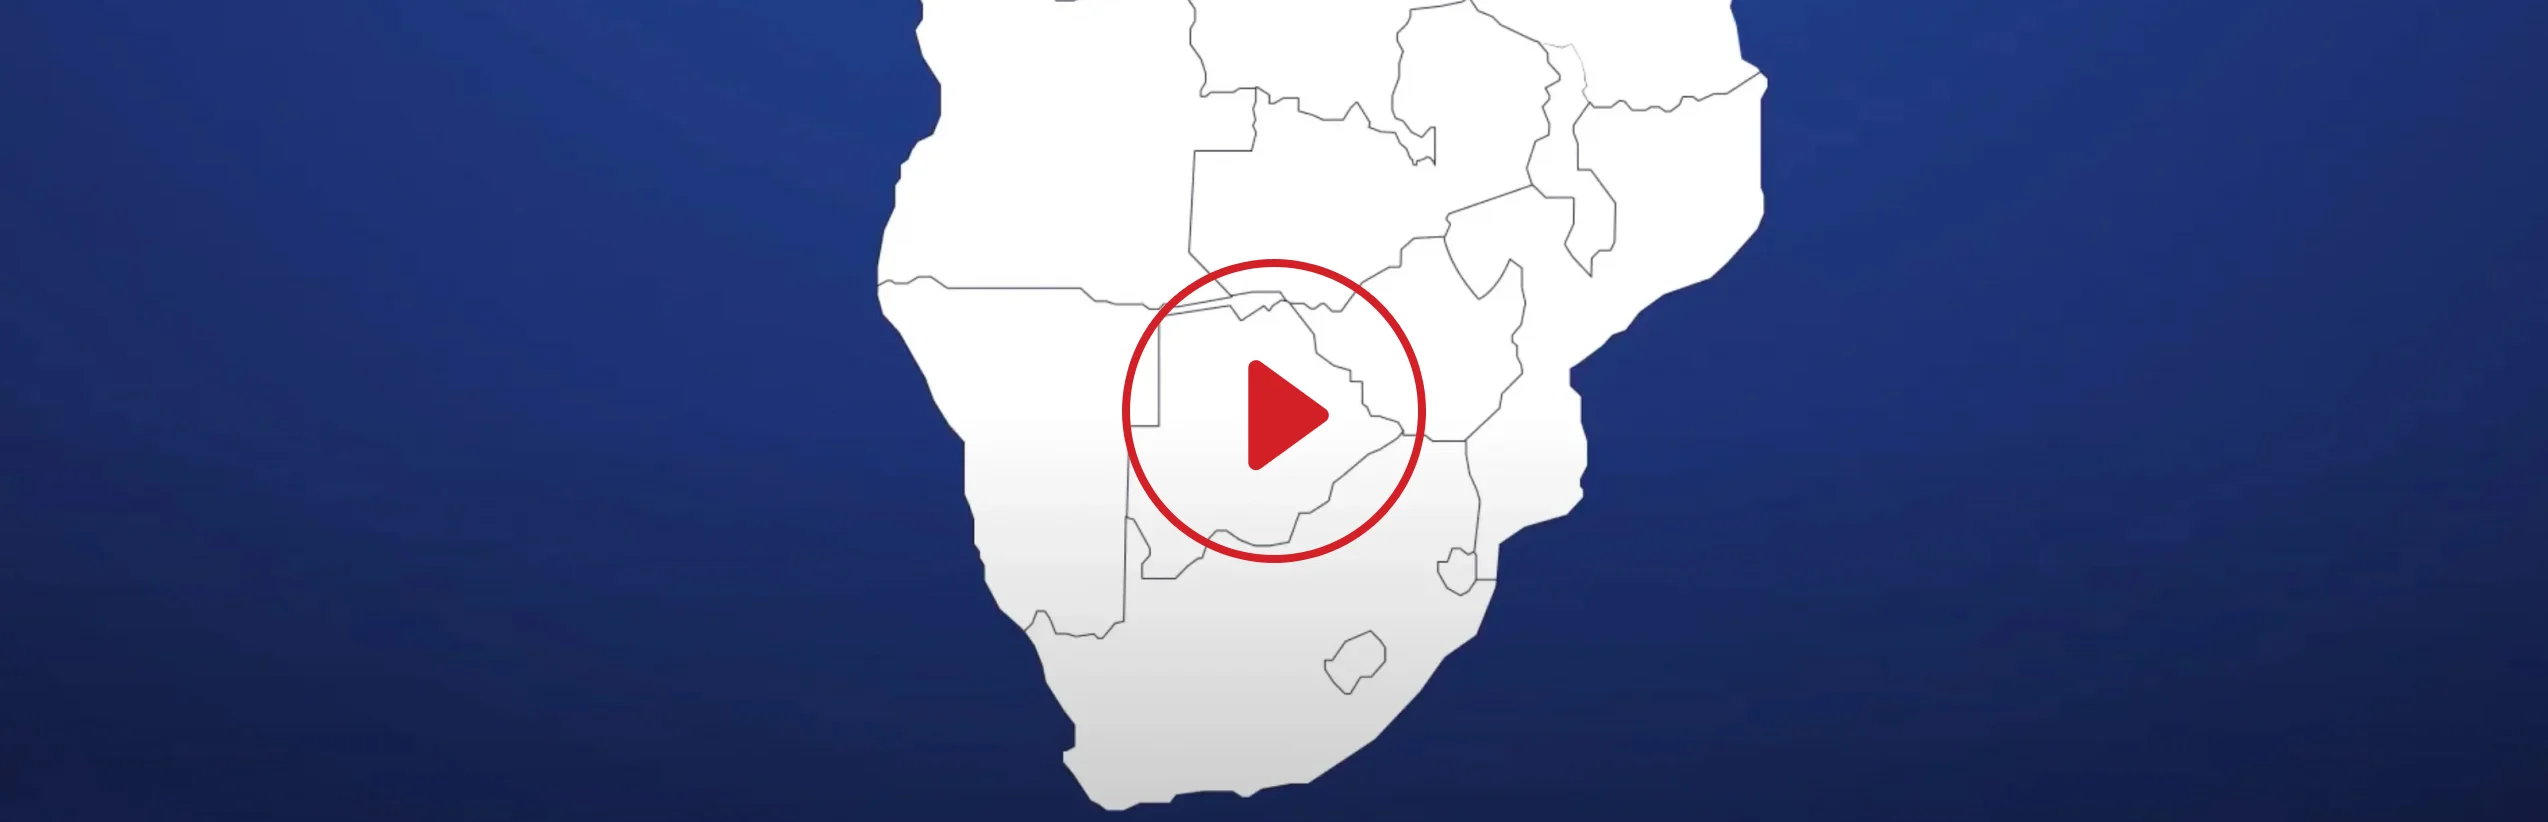 Paratus Africa - Connecter les Africains